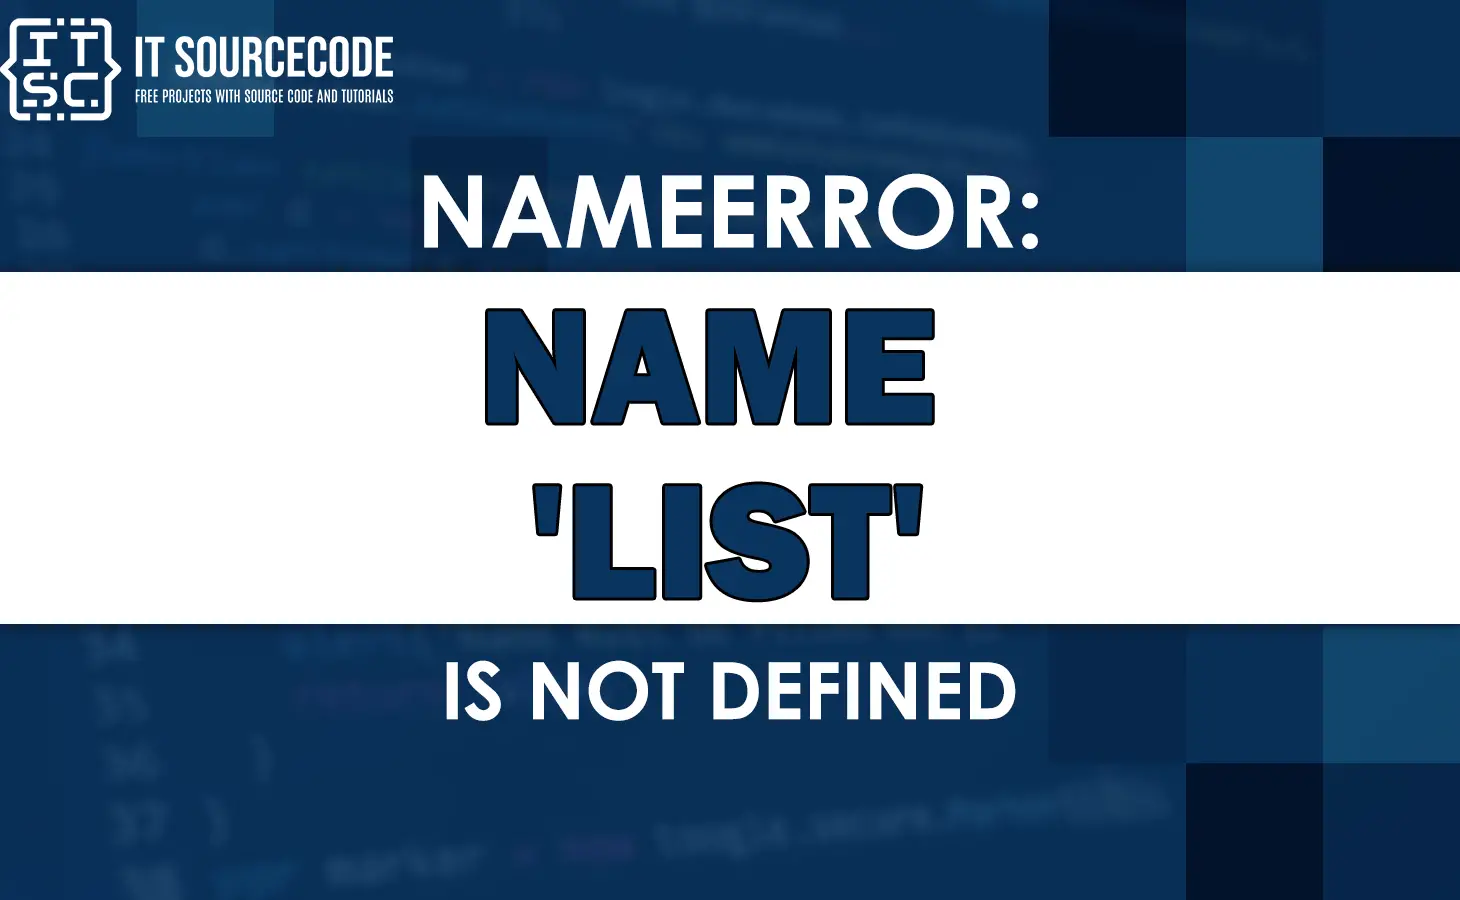 Nameerror: name 'list' is not defined